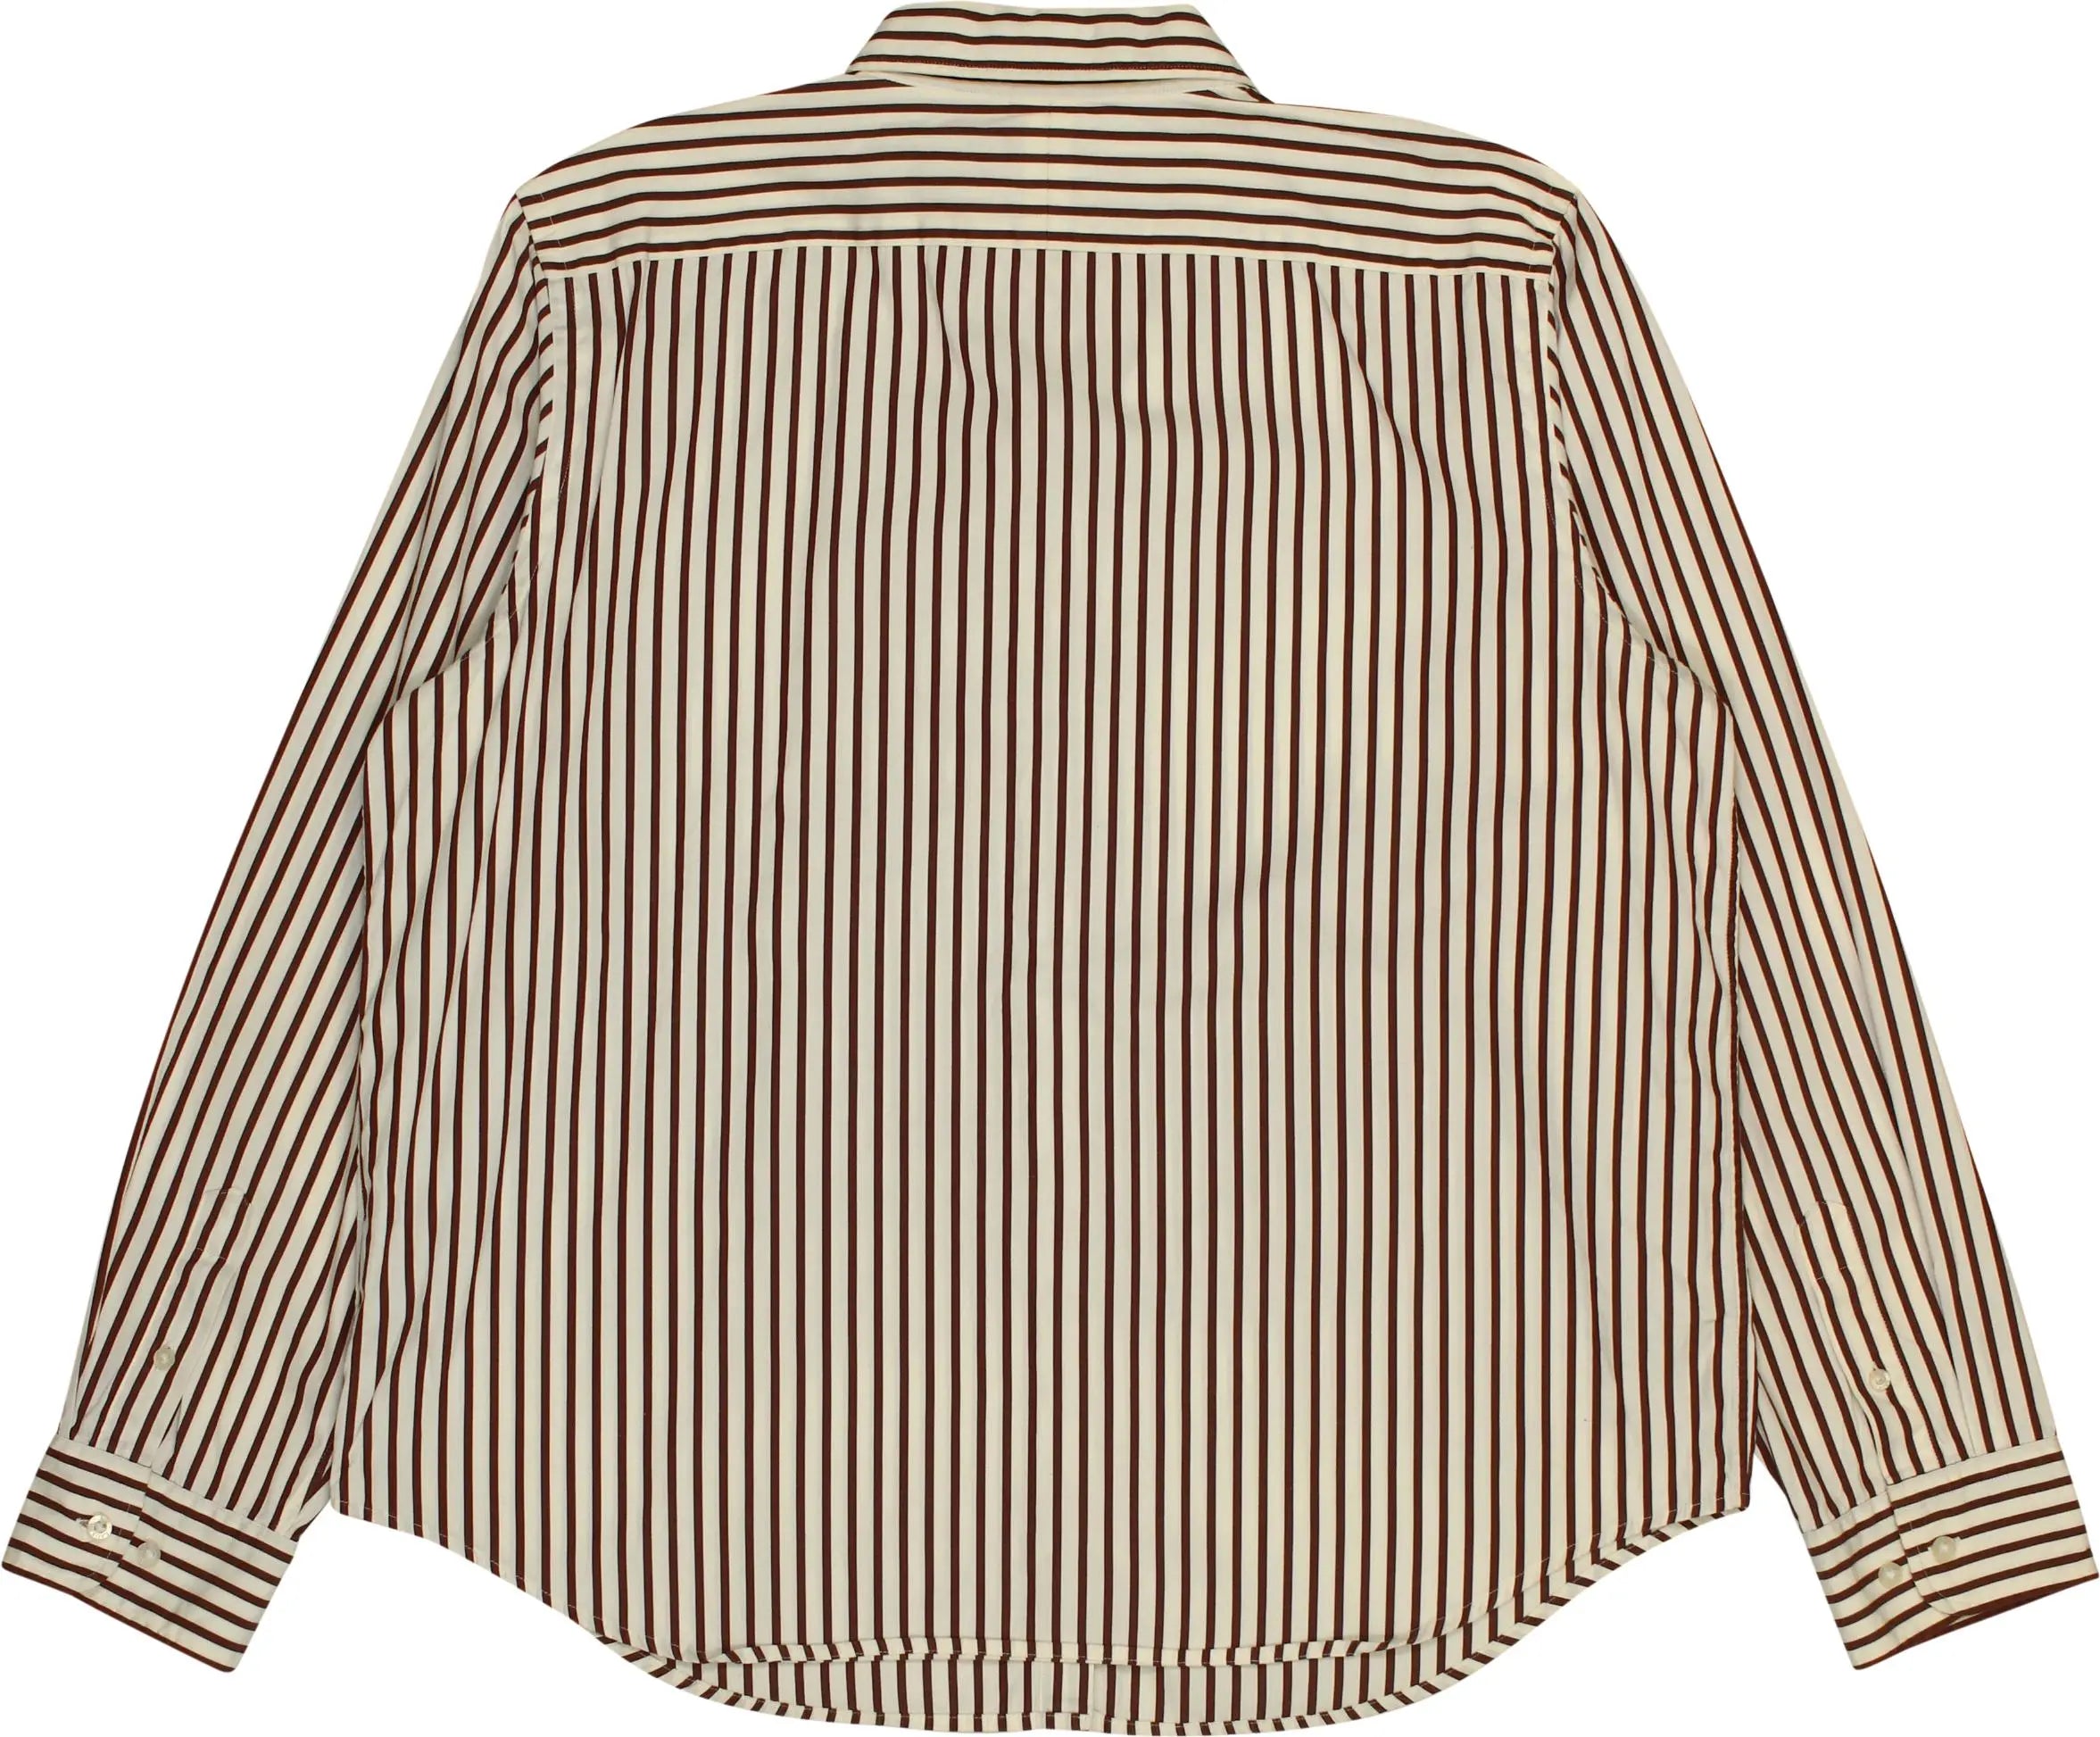 Ralph Lauren - Striped Shirt by Ralph Lauren- ThriftTale.com - Vintage and second handclothing